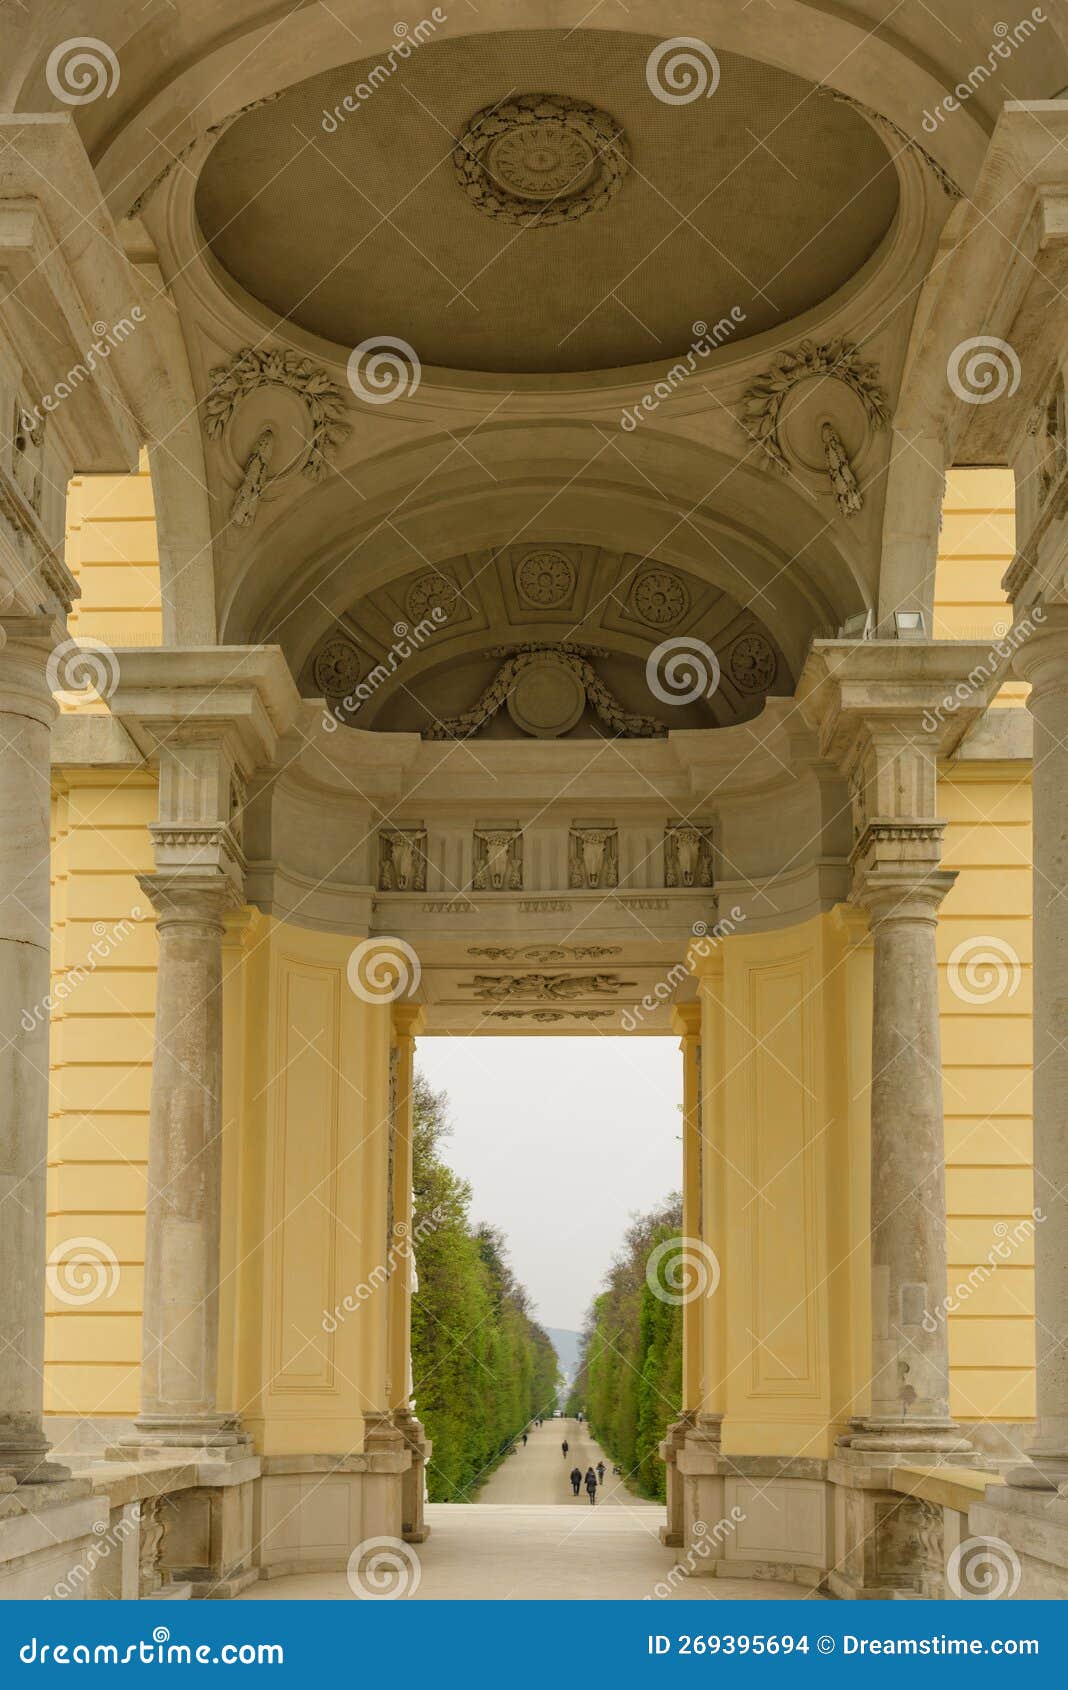 magnificent monumental baroque garden building in schÃ¶nbrunn palace park, vienna, austria